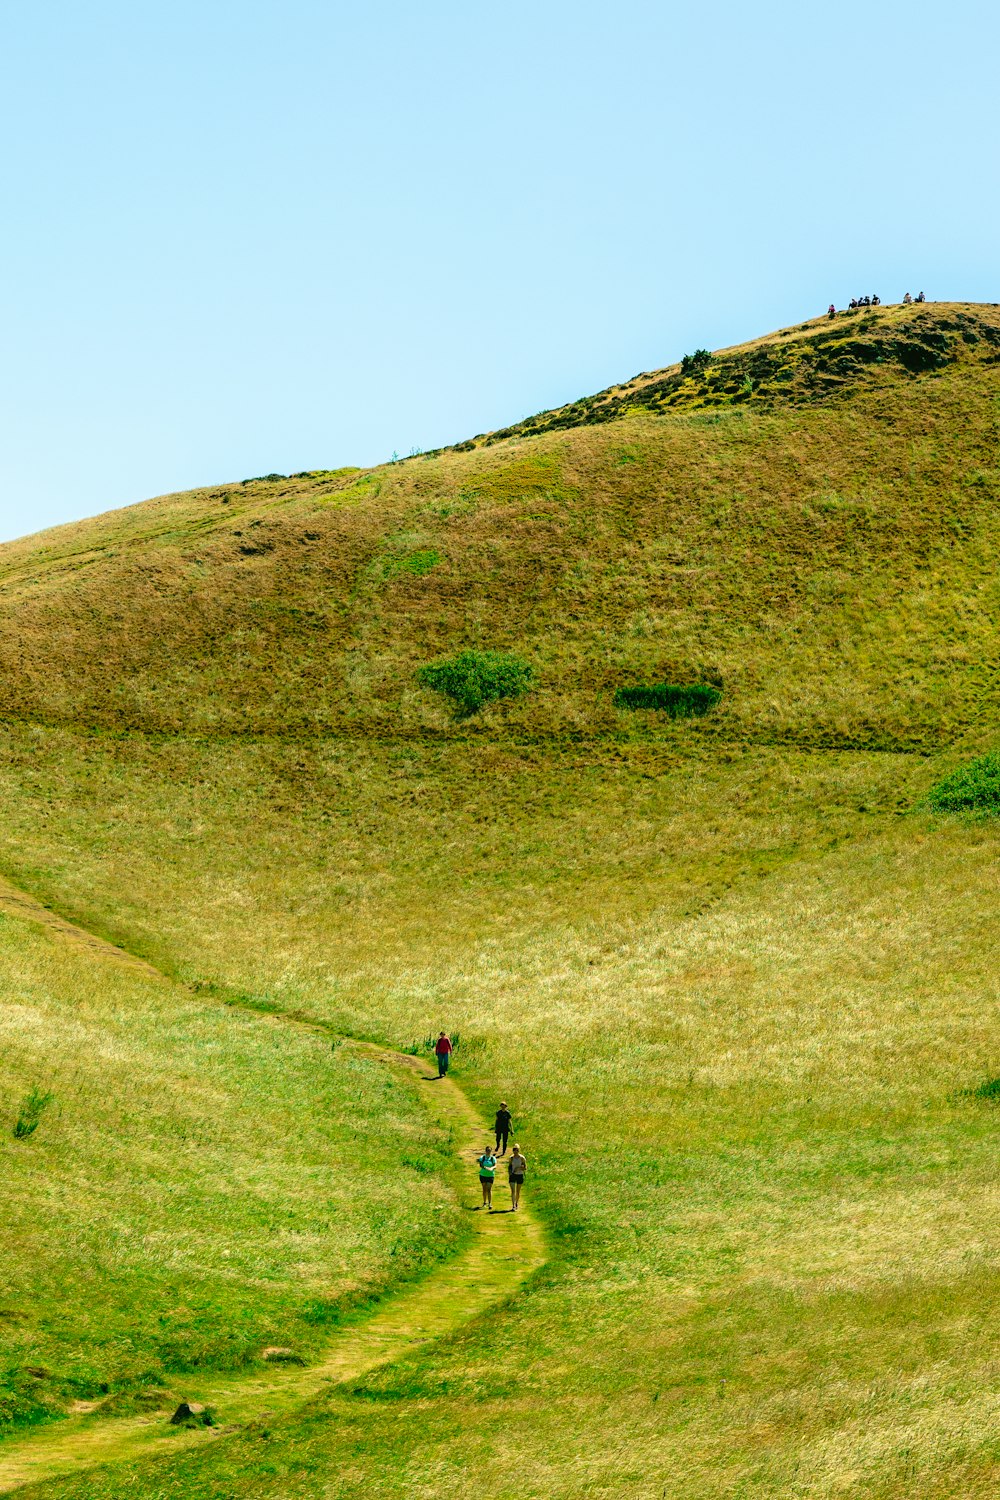 a group of people walking across a lush green hillside